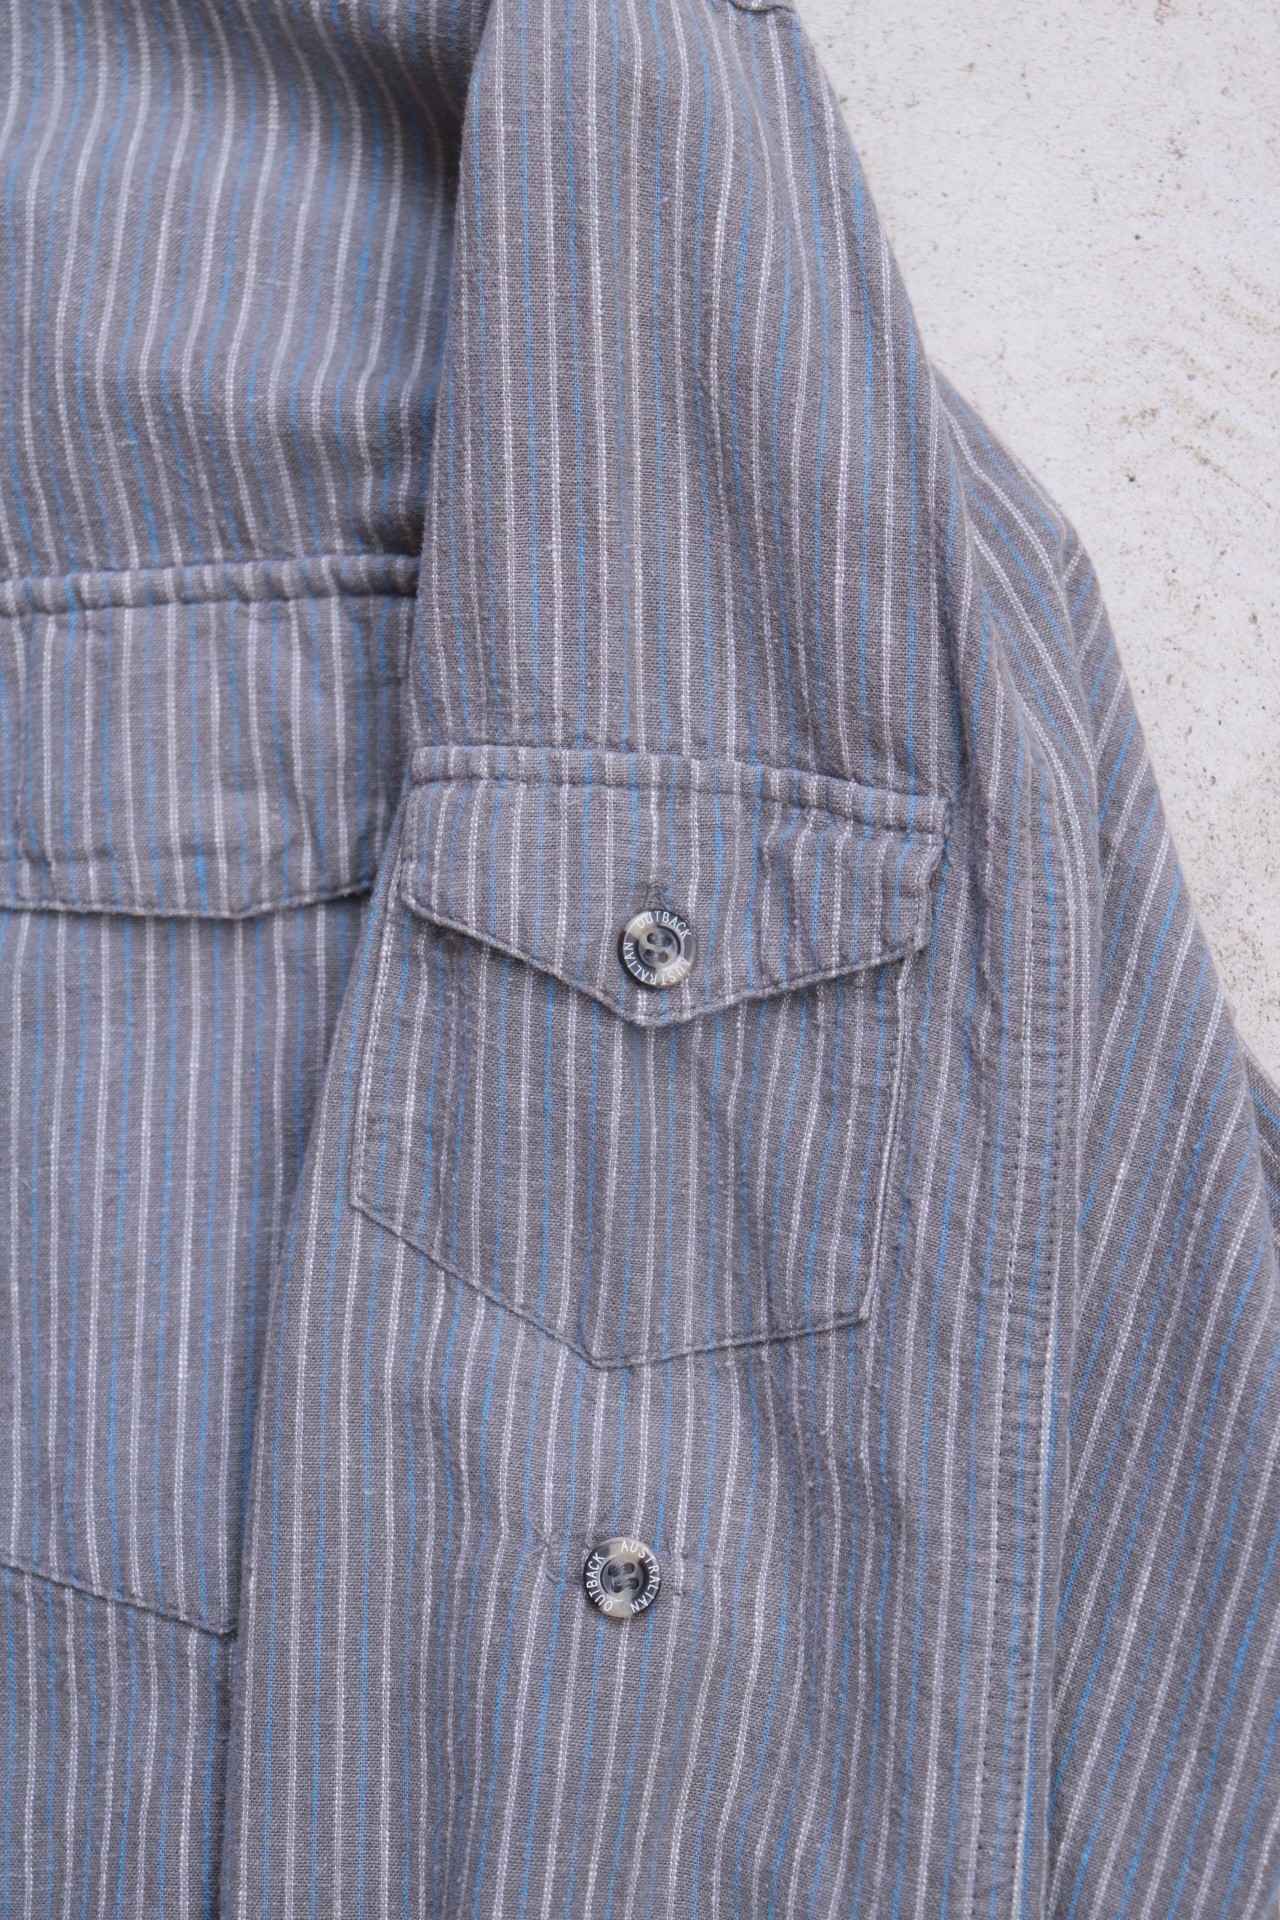 Vintage linen gray stripe shirt